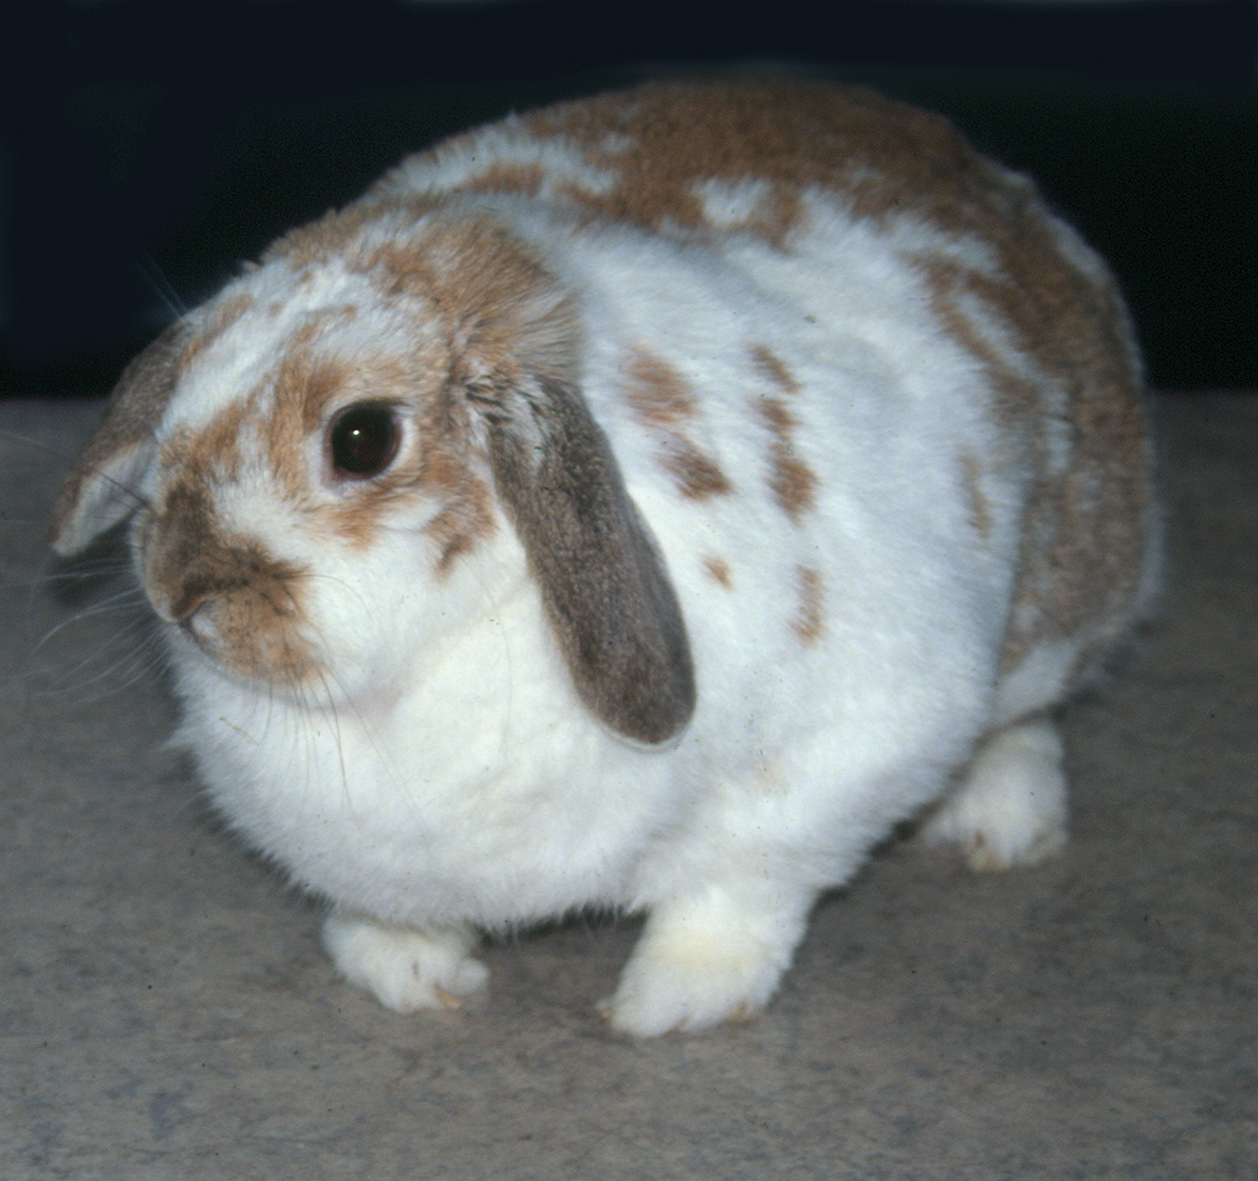 Obese rabbit